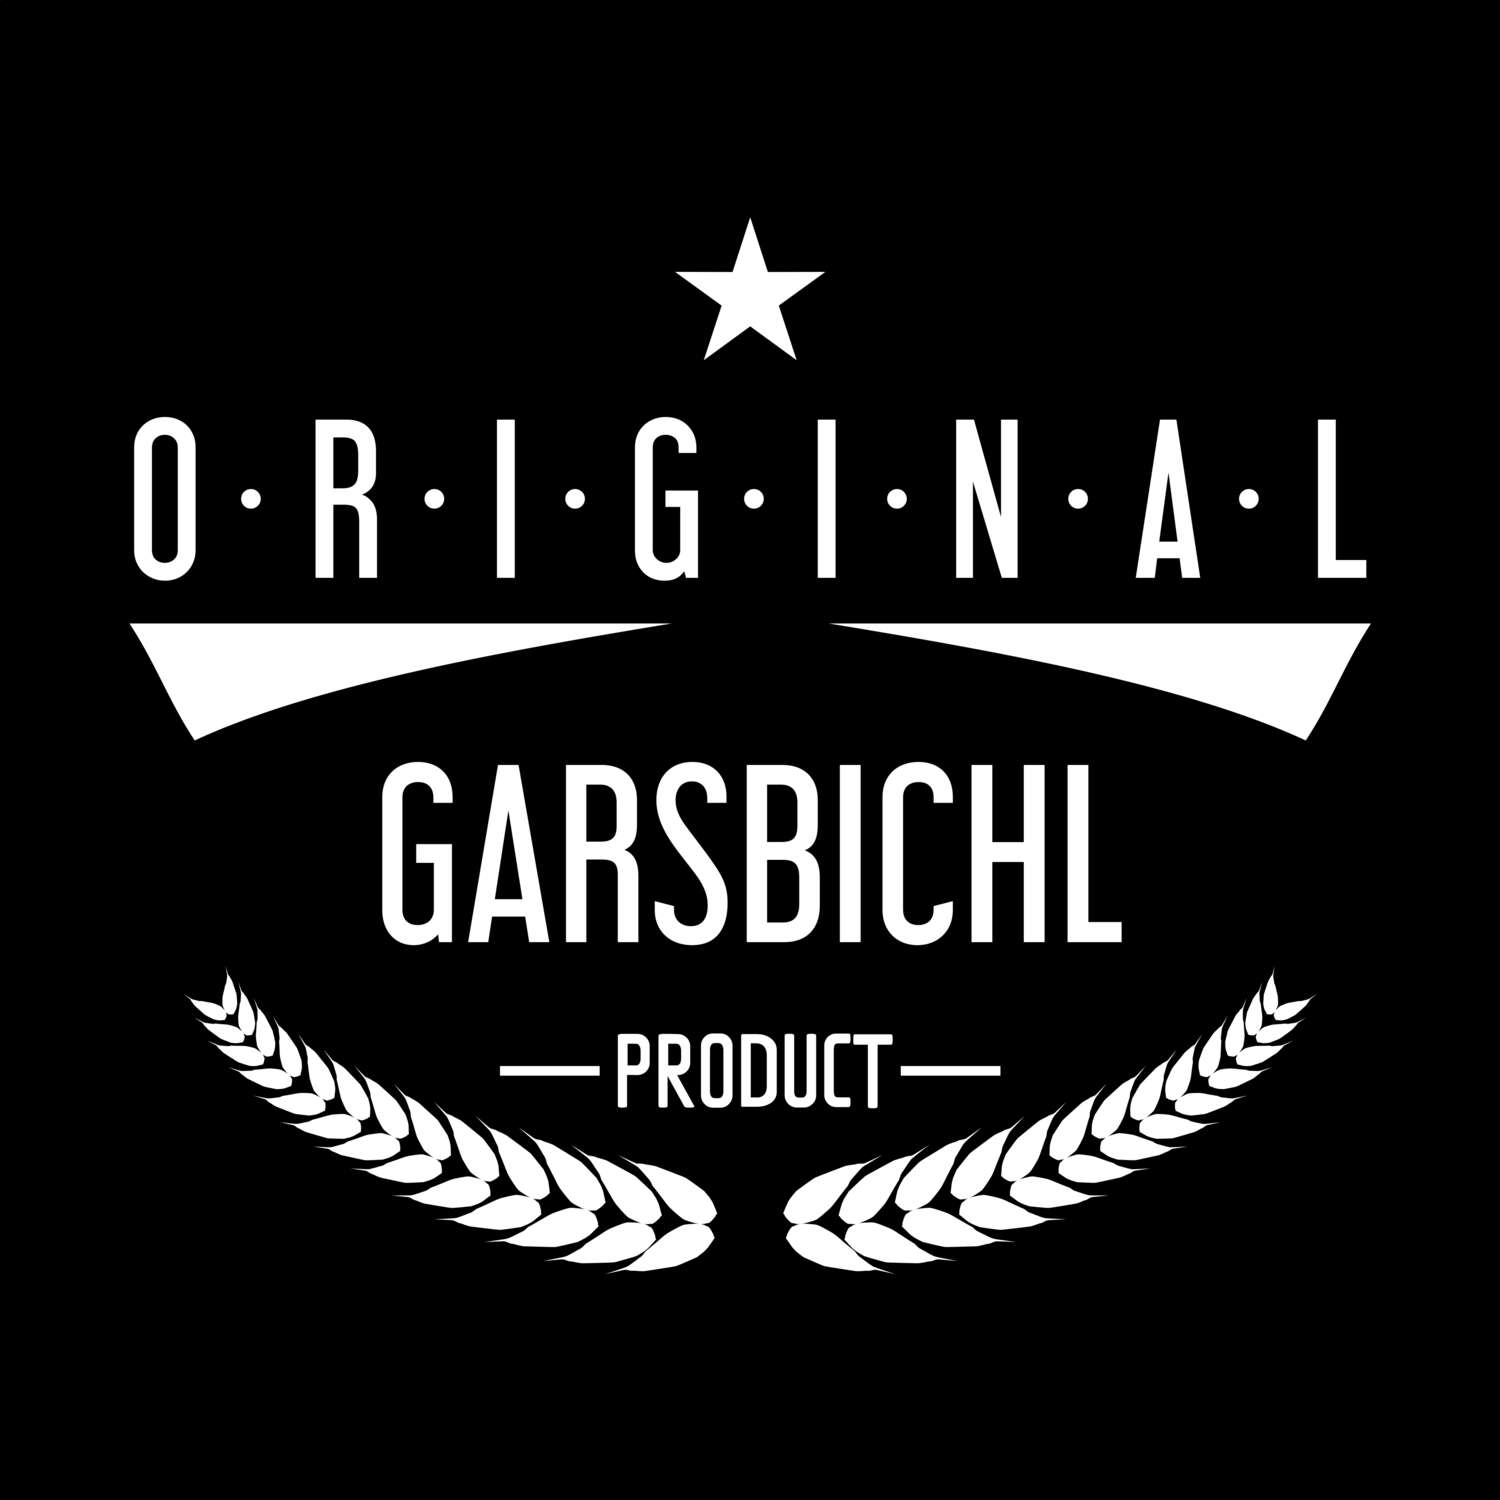 Garsbichl T-Shirt »Original Product«